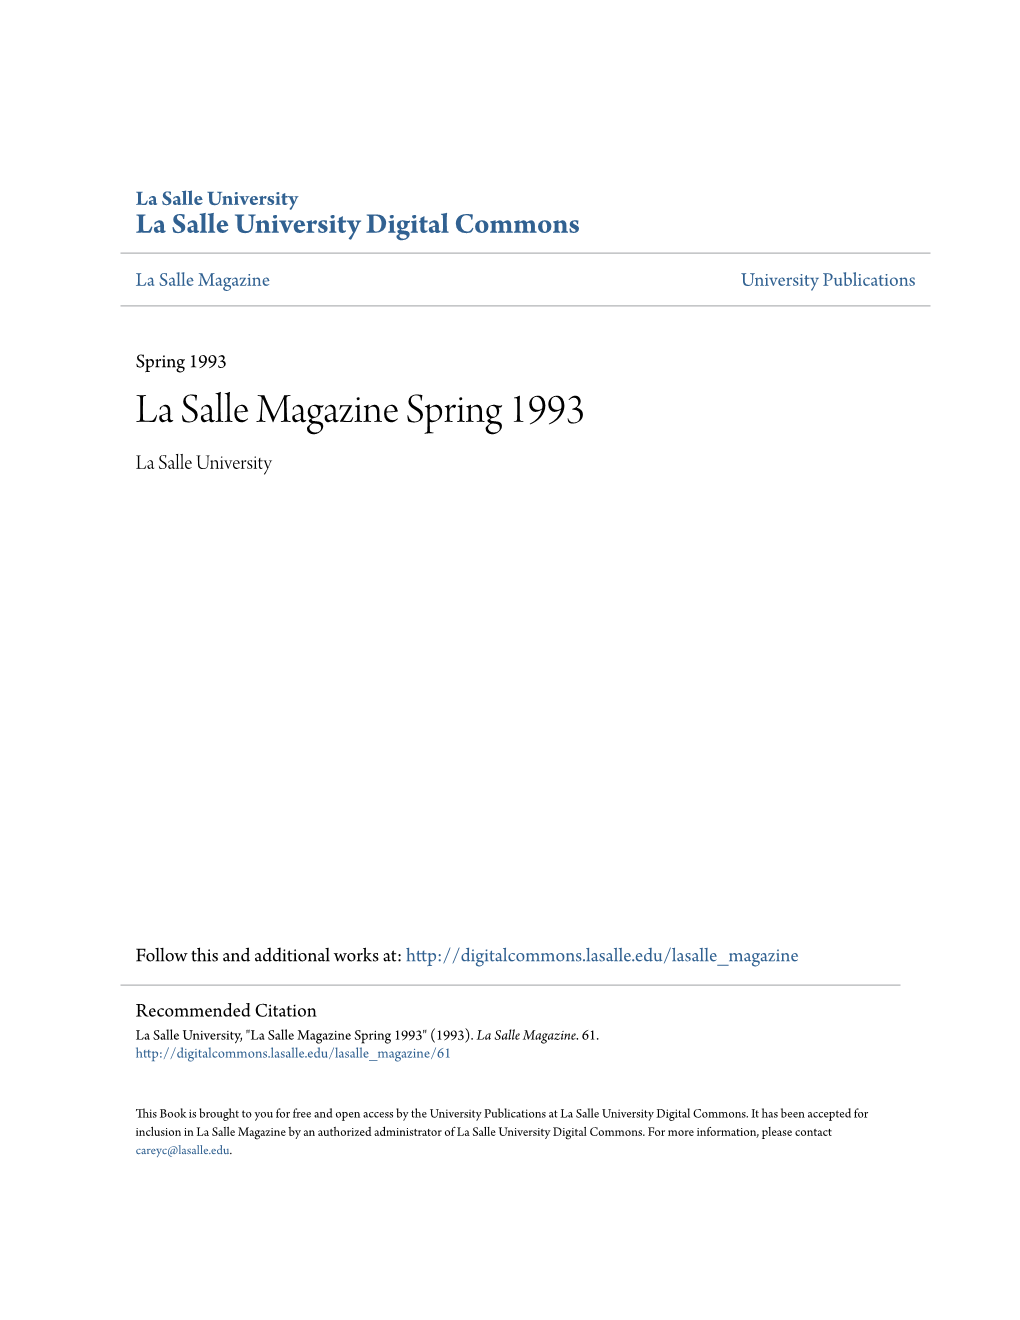 La Salle Magazine Spring 1993 La Salle University